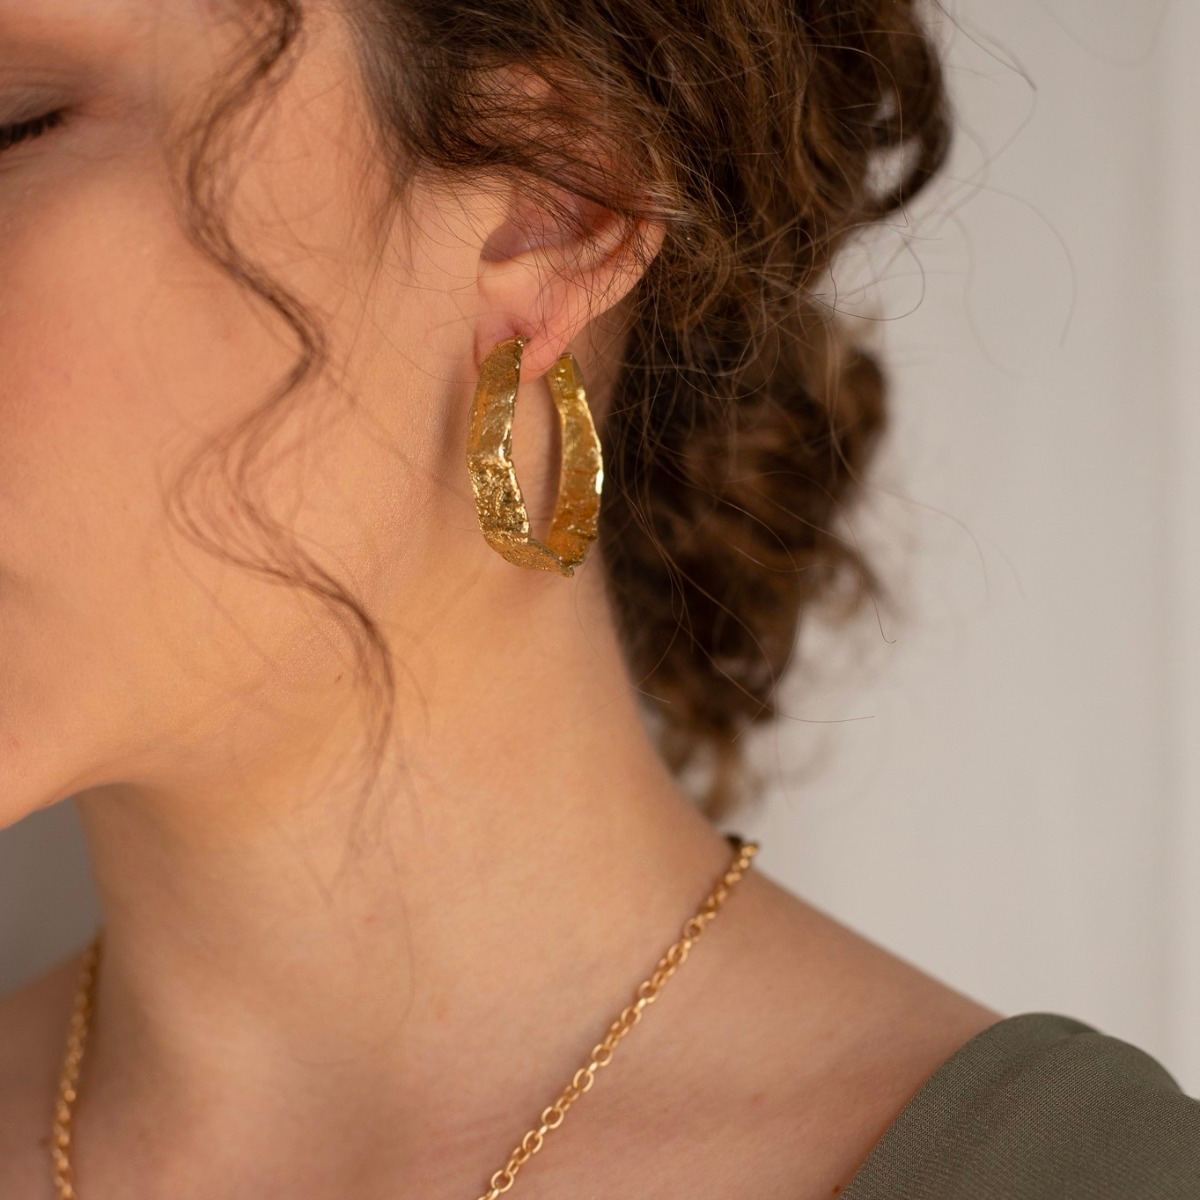 Bronze Earrings - The Nancy Smillie Shop - Art, Jewellery & Designer Gifts Glasgow